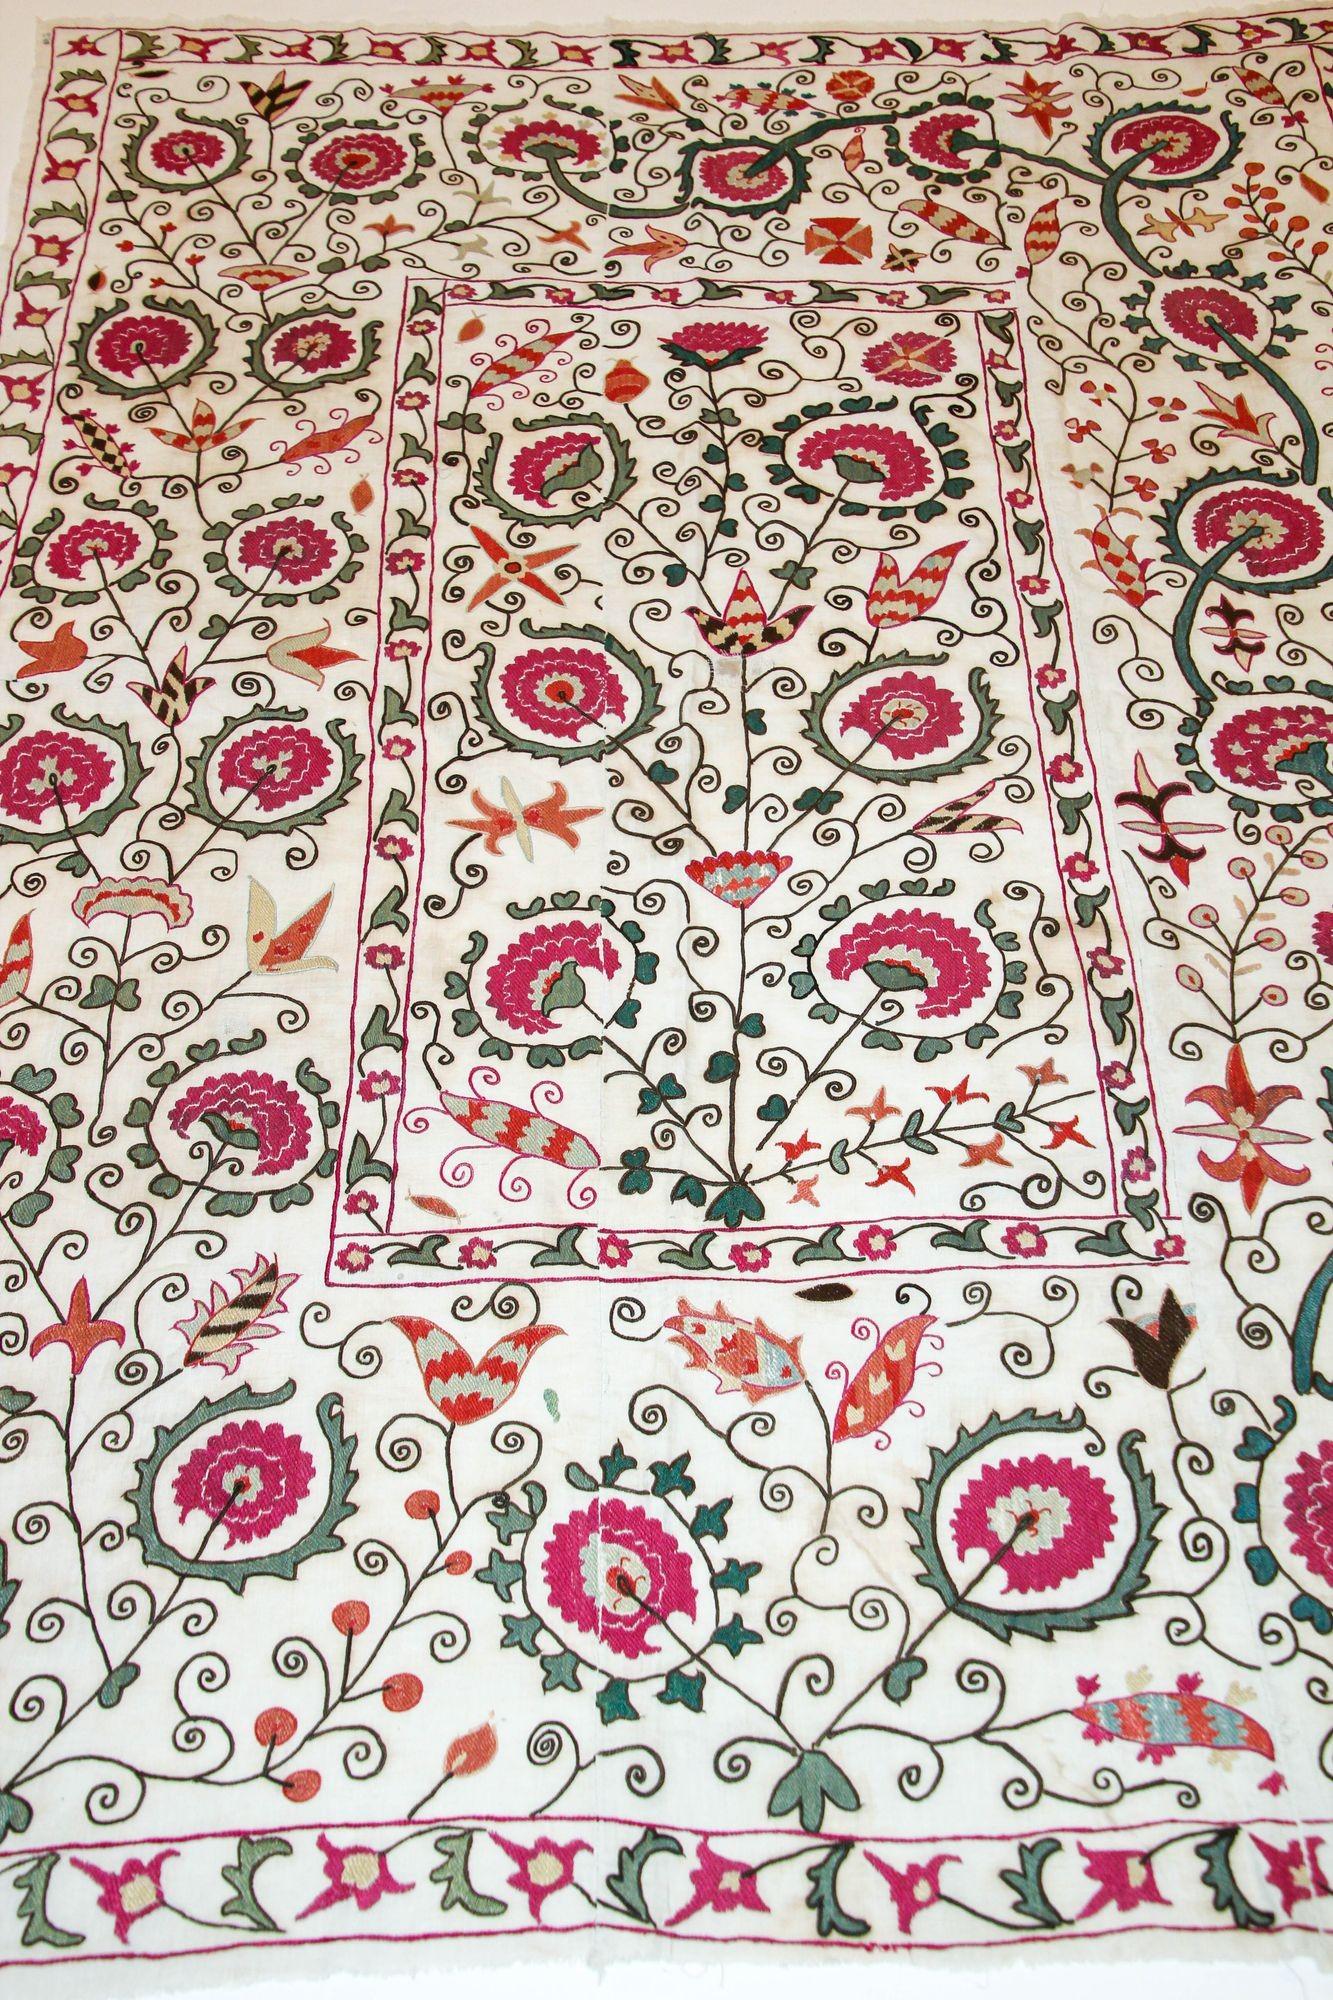 19th C. Suzani Bukhara Uzbekistan Antique Embroidered Islamic Art Textile Susani For Sale 11